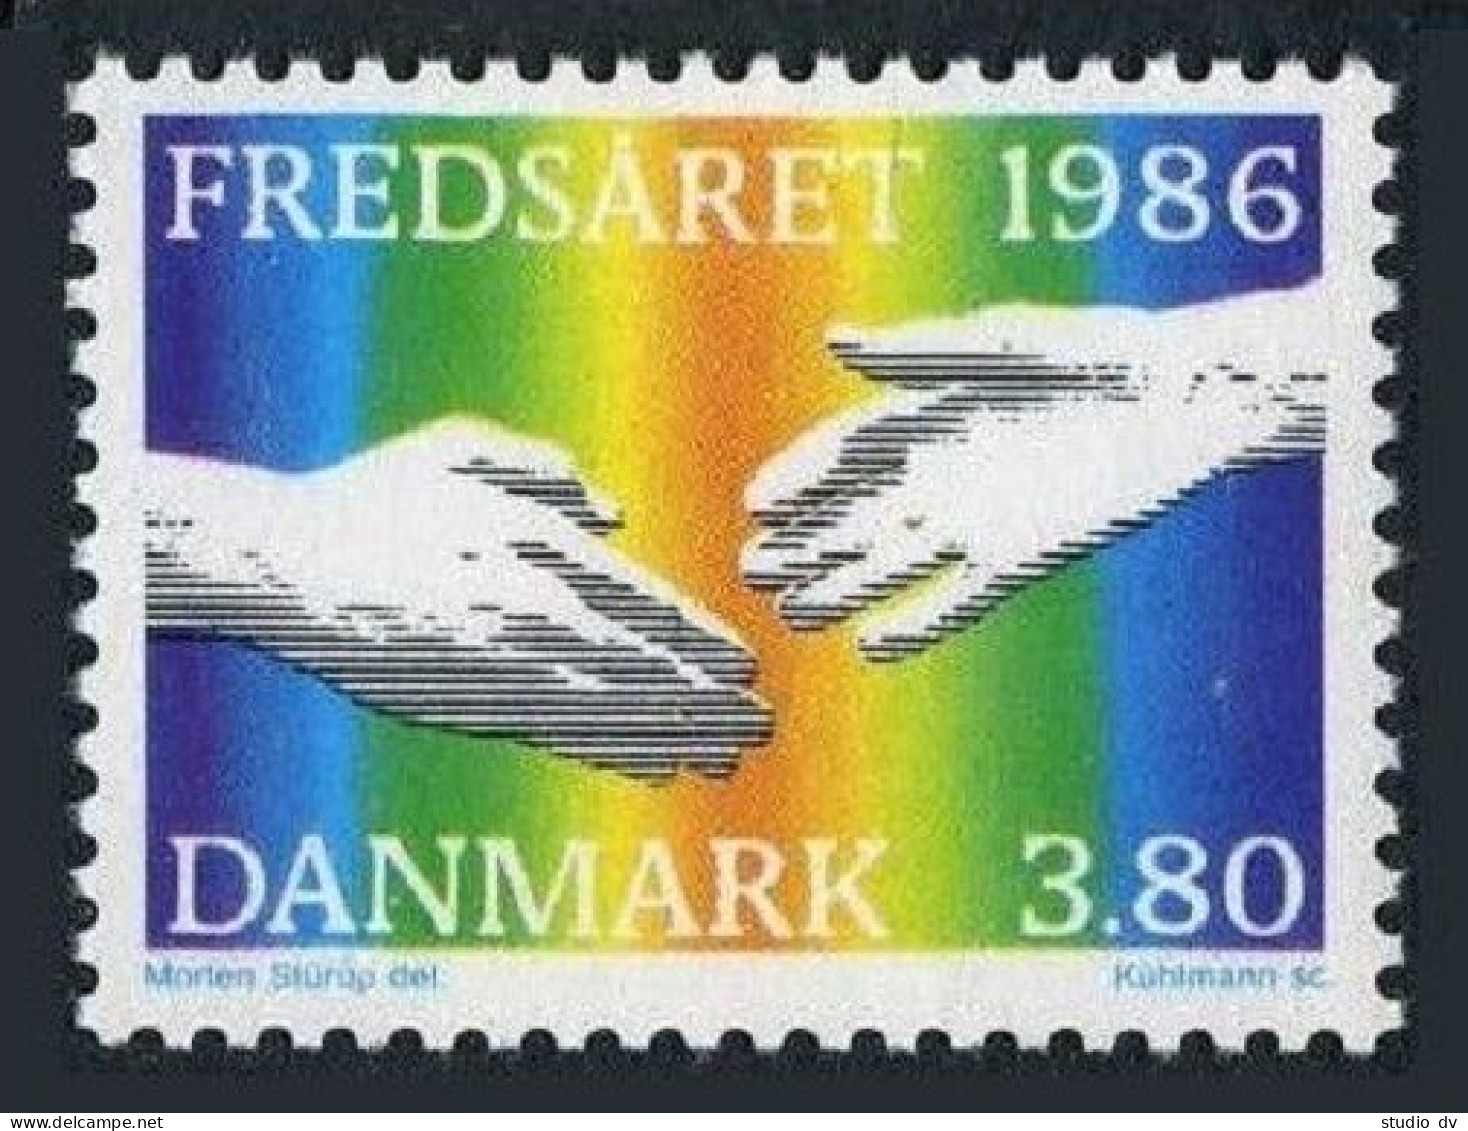 Denmark 817, MNH. Michel 866. International Peace Year IPY-1986. - Ongebruikt